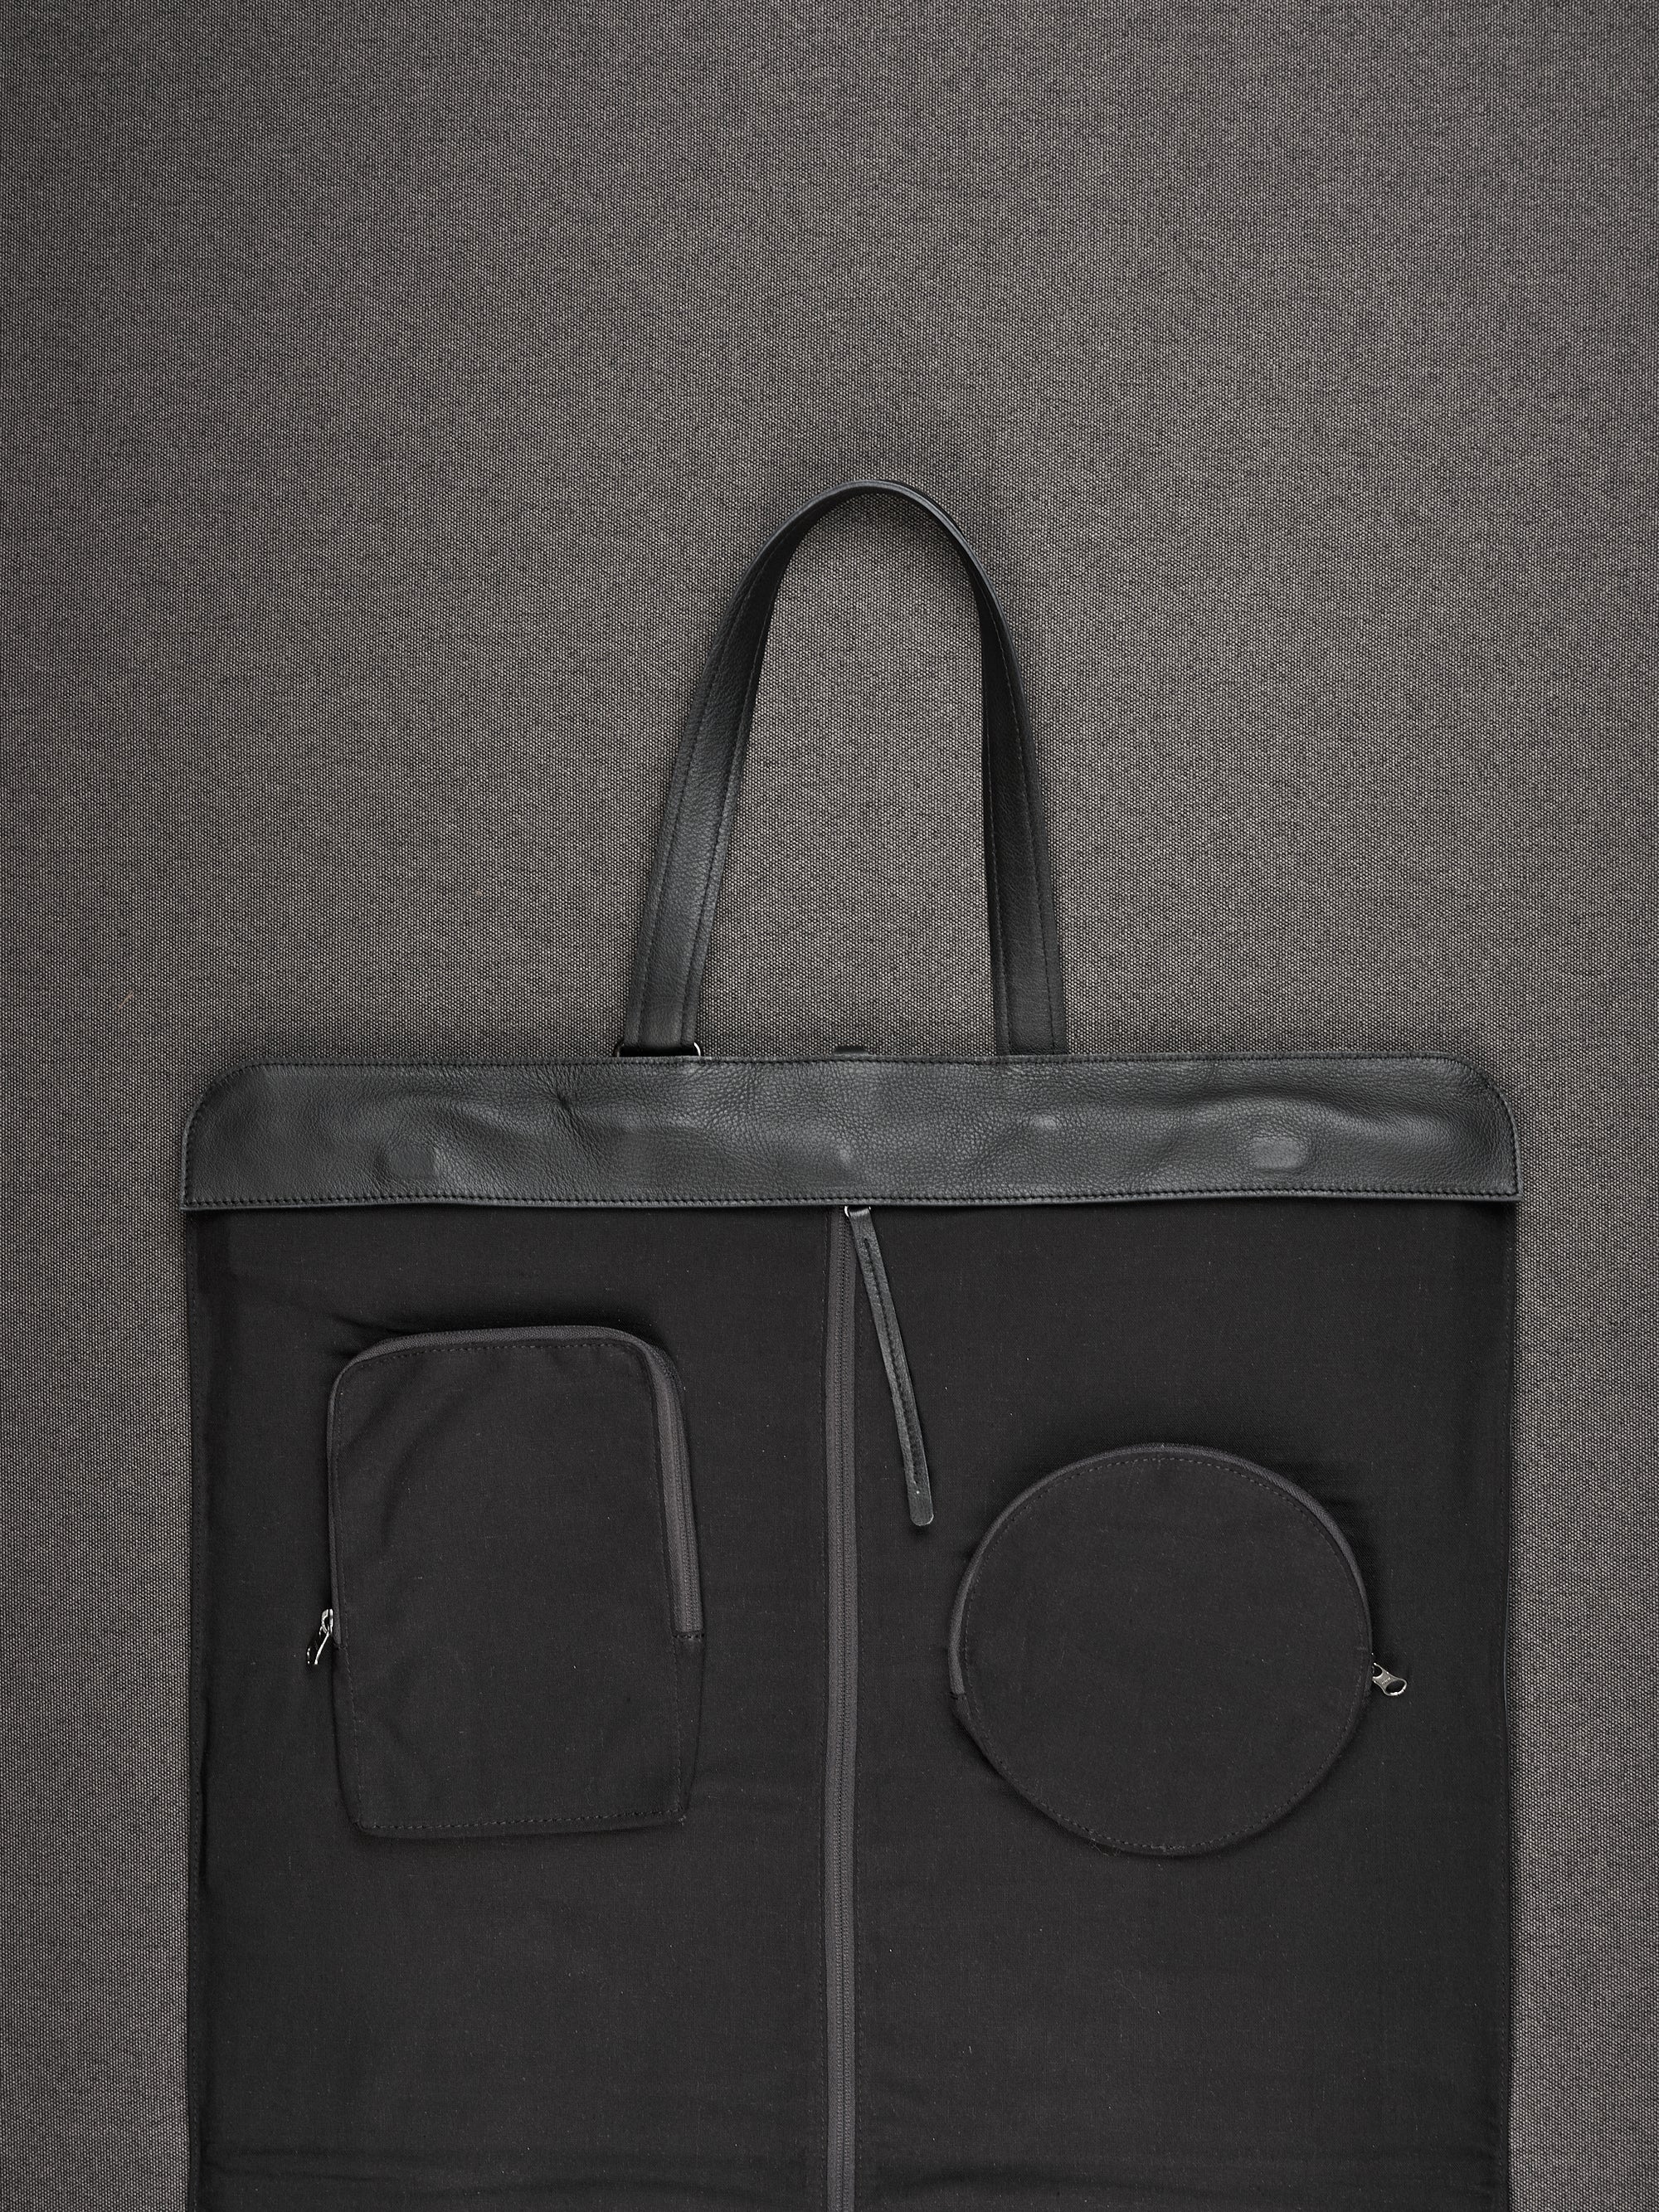 Linen Interior. Travel Suit Bag Black by Capra Leather